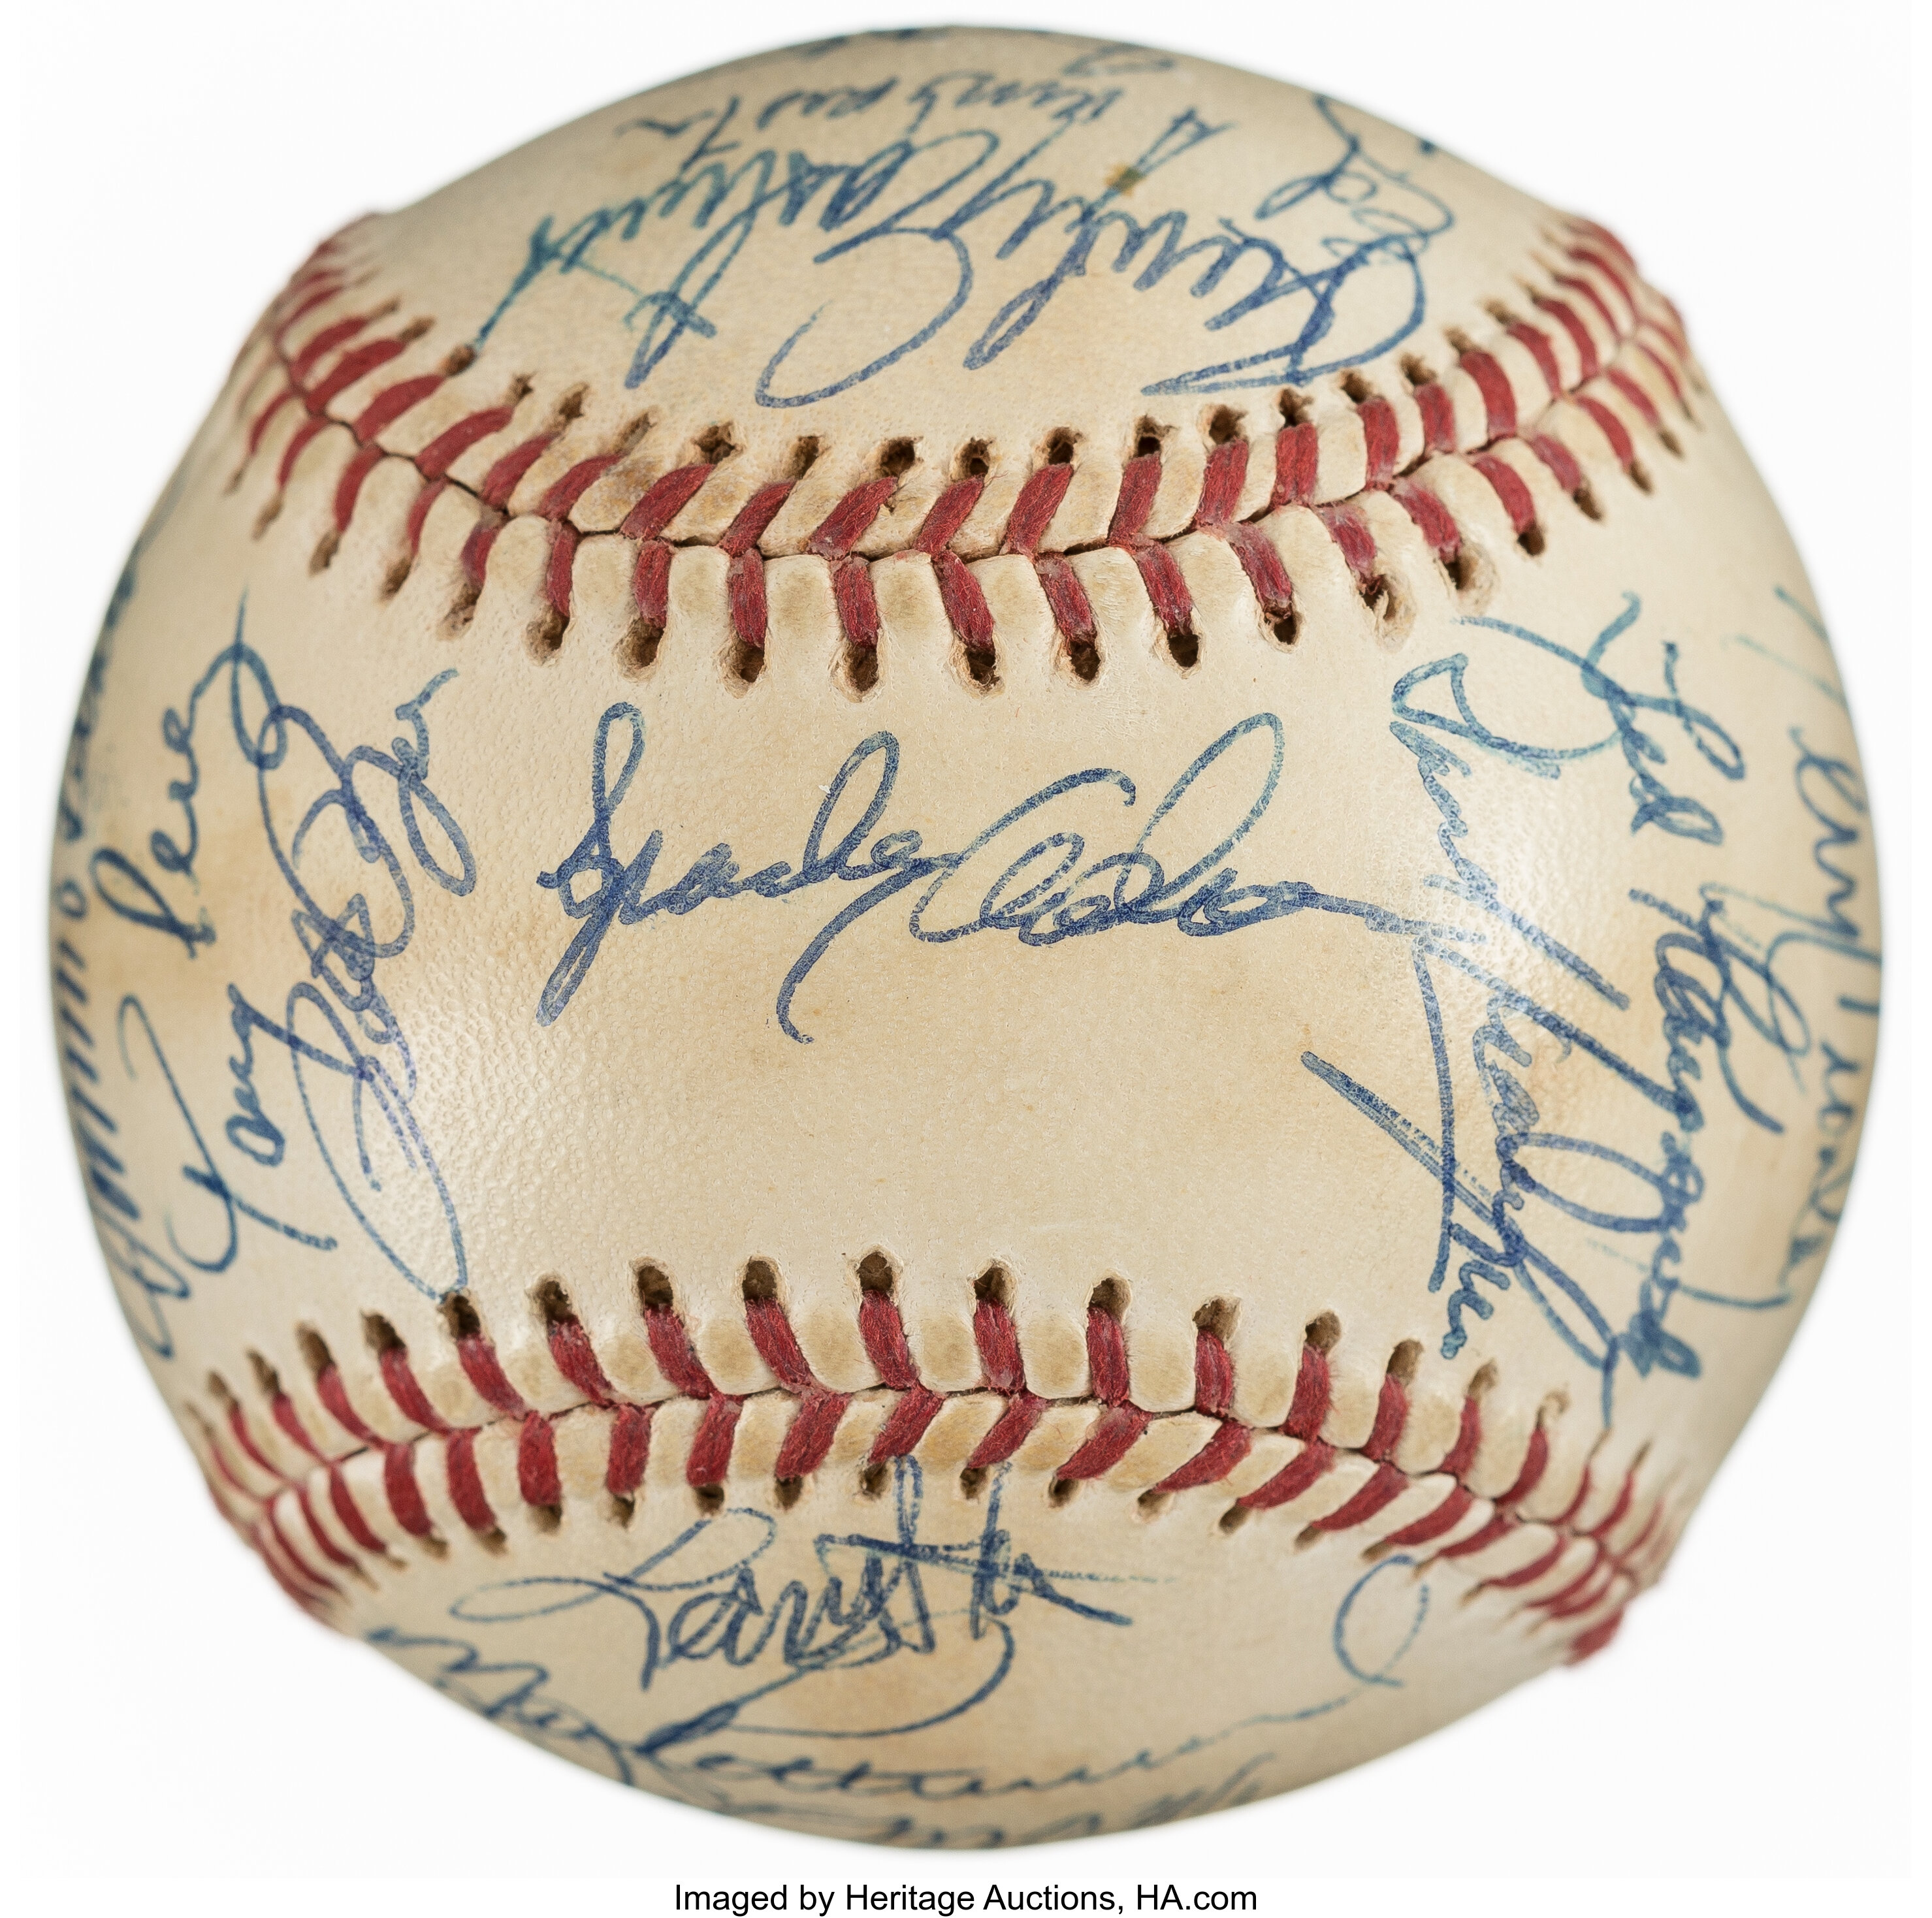 1975 Cincinnati Reds Team Signed Baseball - World Series Champions